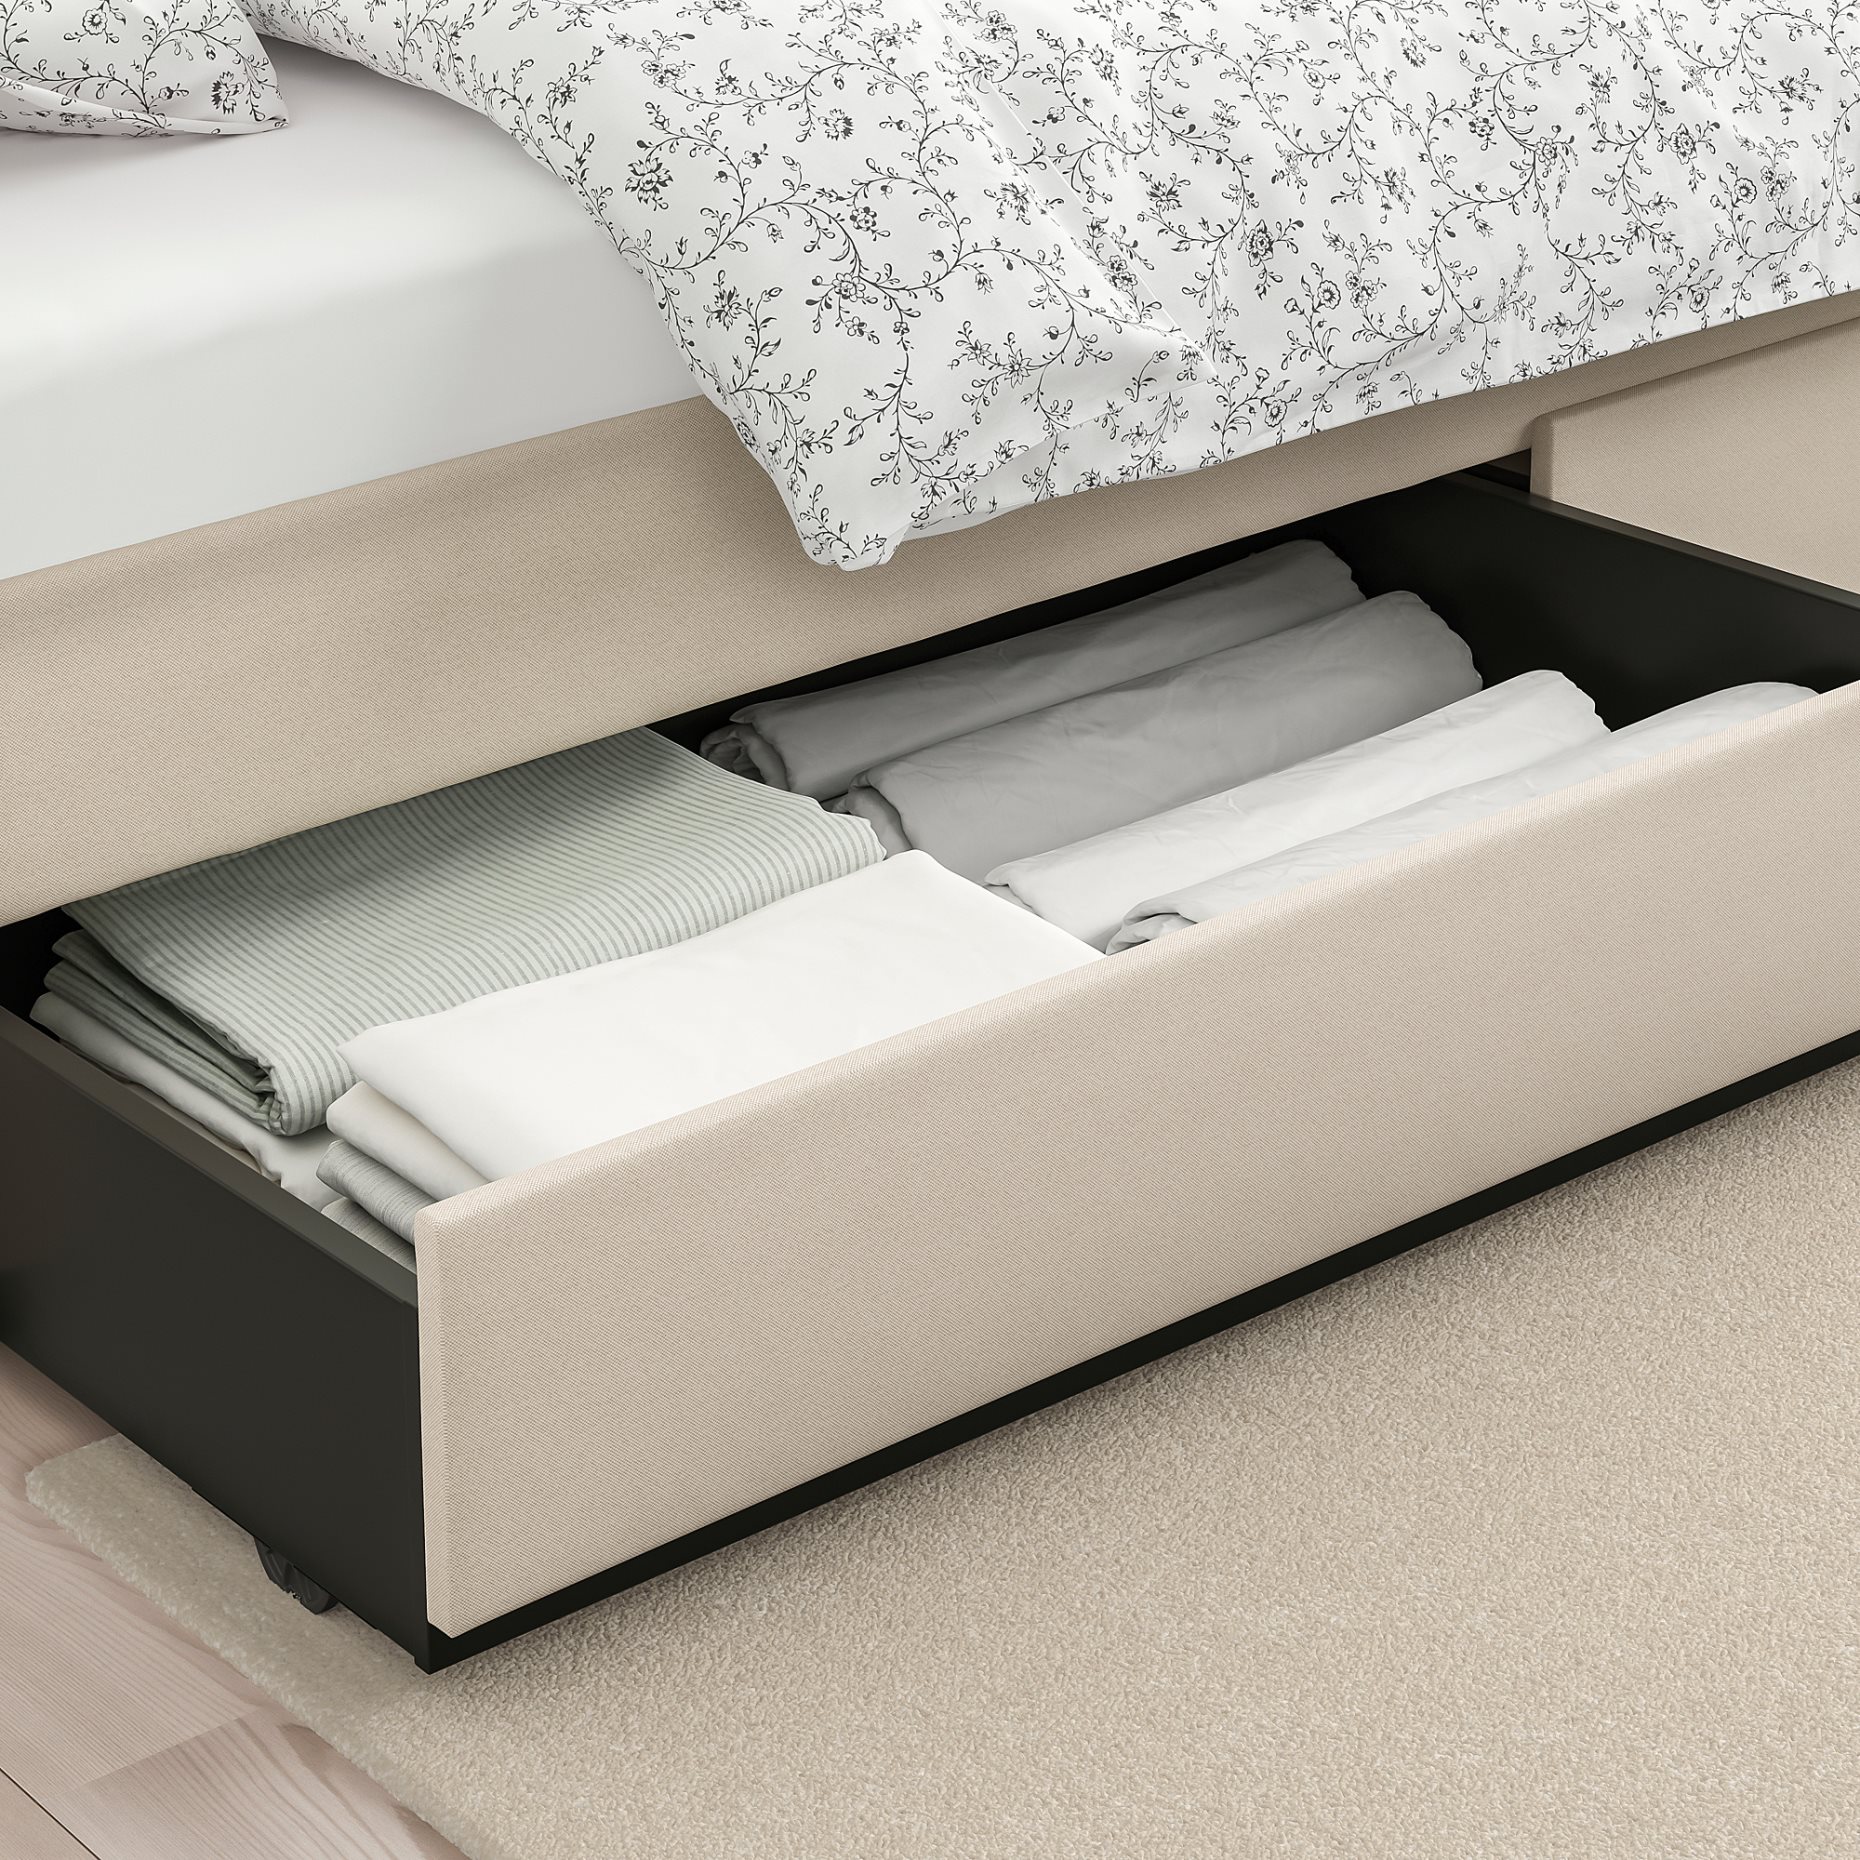 HAUGA, κρεβάτι με επένδυση/2 αποθηκευτικά κουτιά, 160X200 cm, 093.366.49